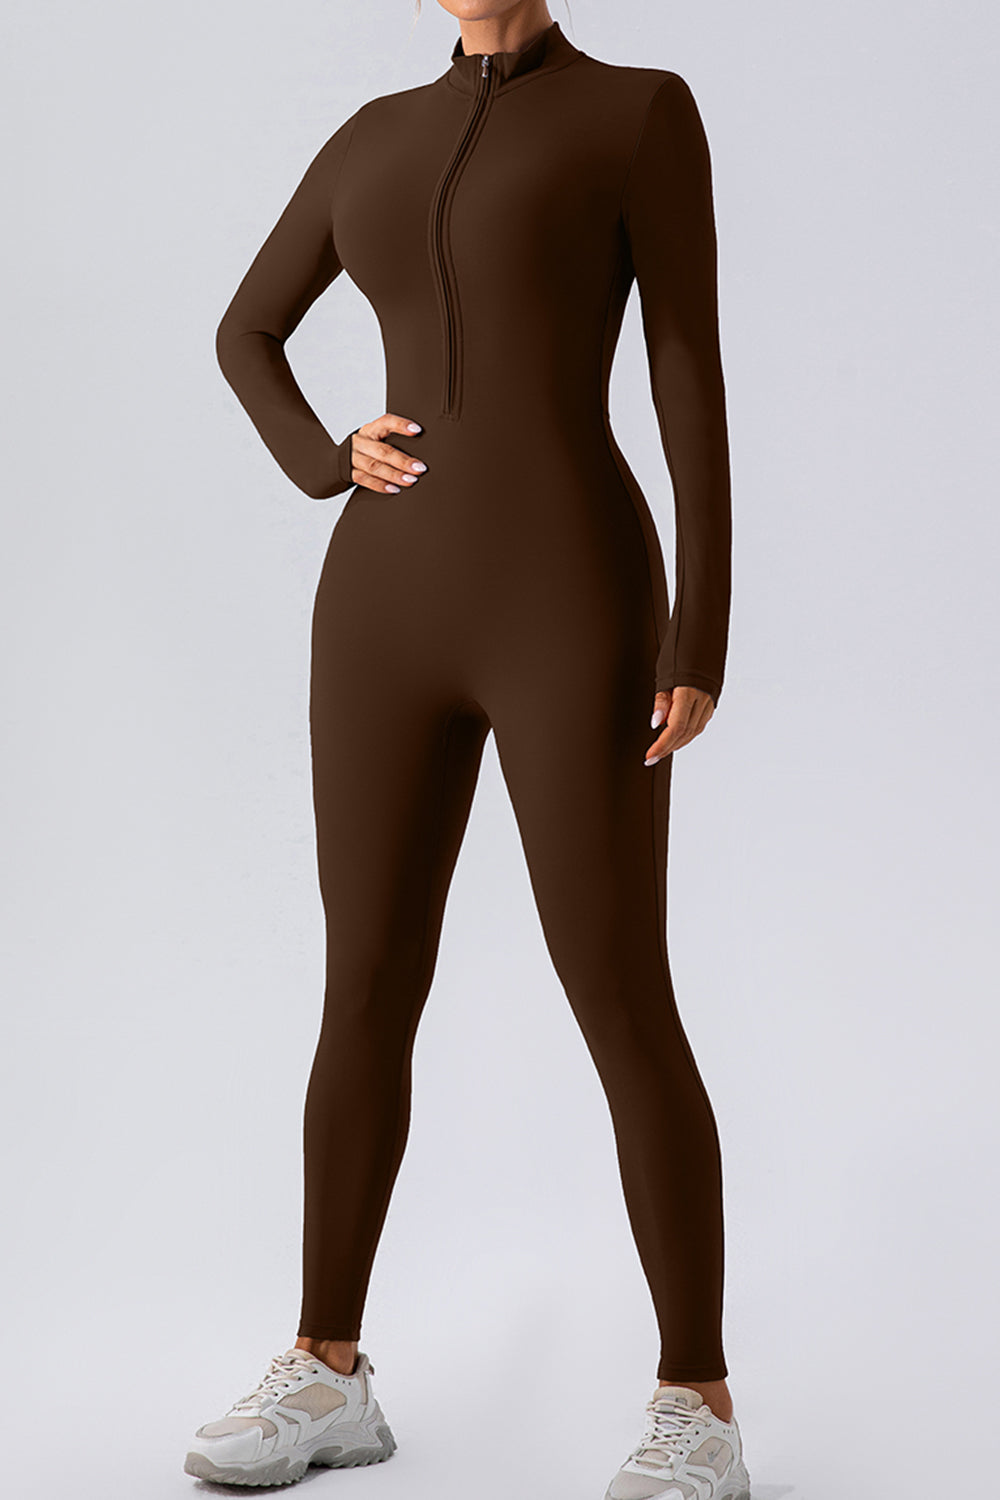 Half Zip Mock Neck Active Jumpsuit Sunset and Swim Chocolate S 